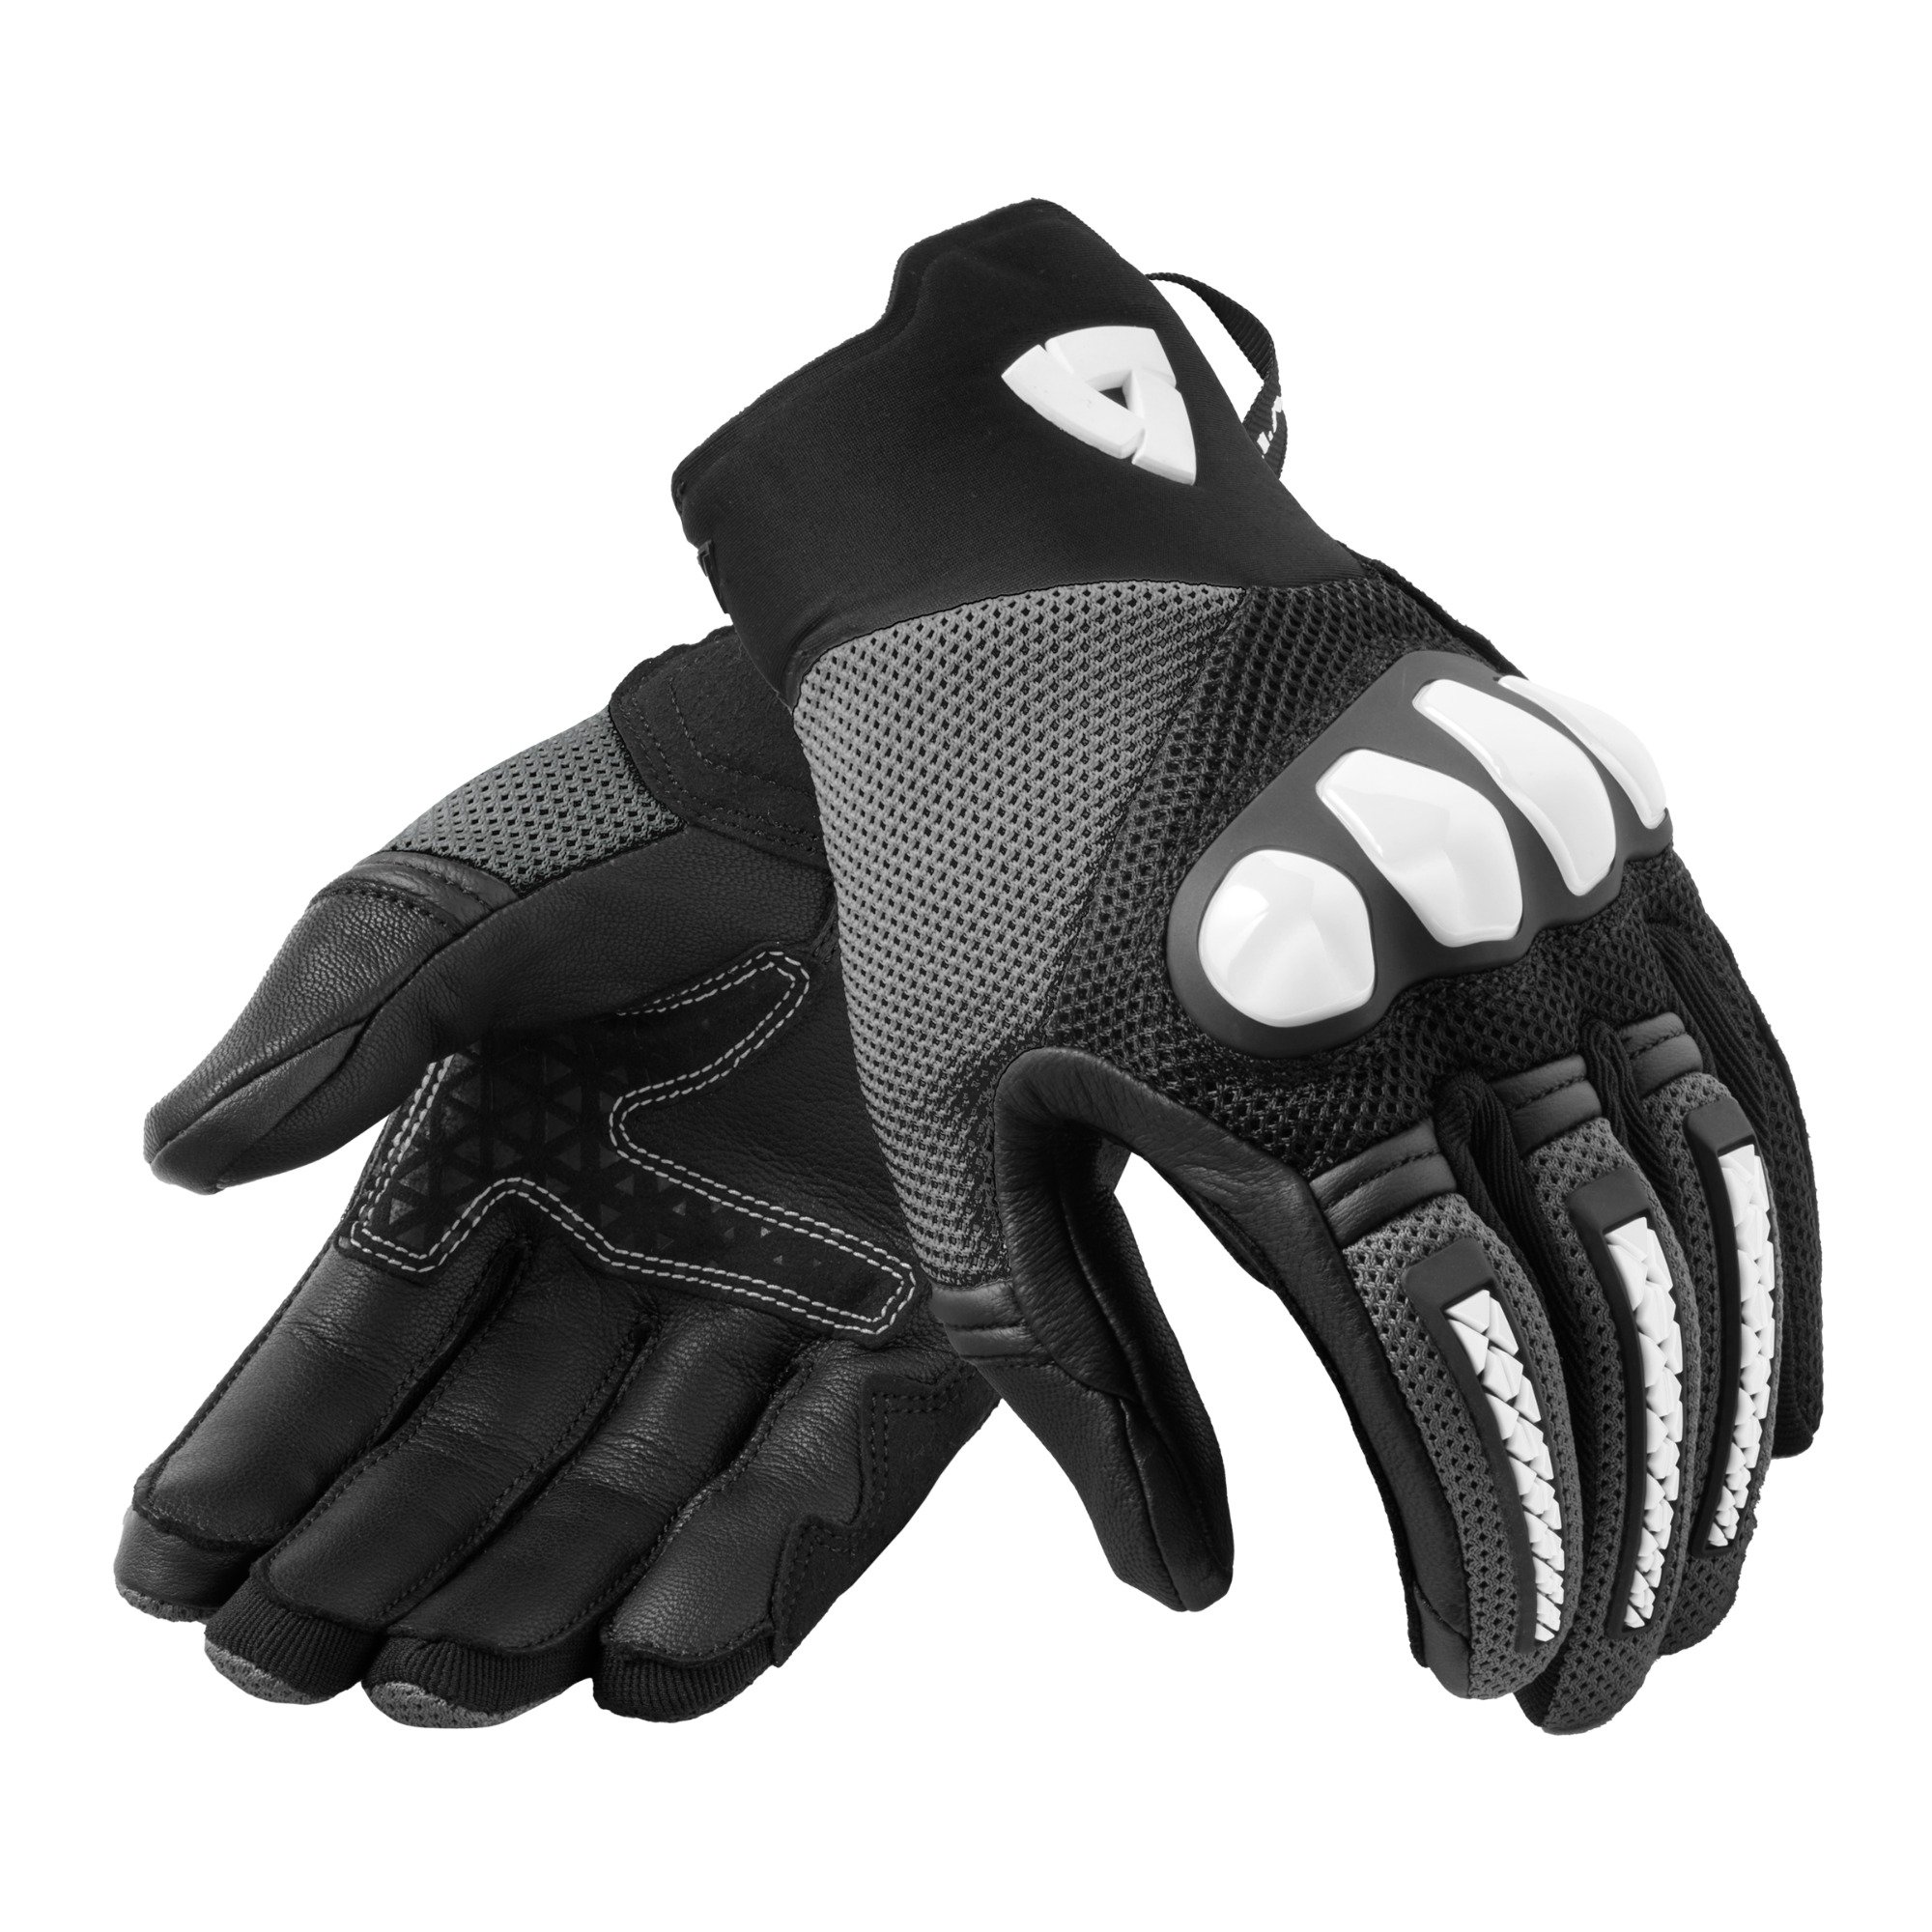 Image of REV'IT! Gloves Speedart Air Black White Size M ID 8700001360869